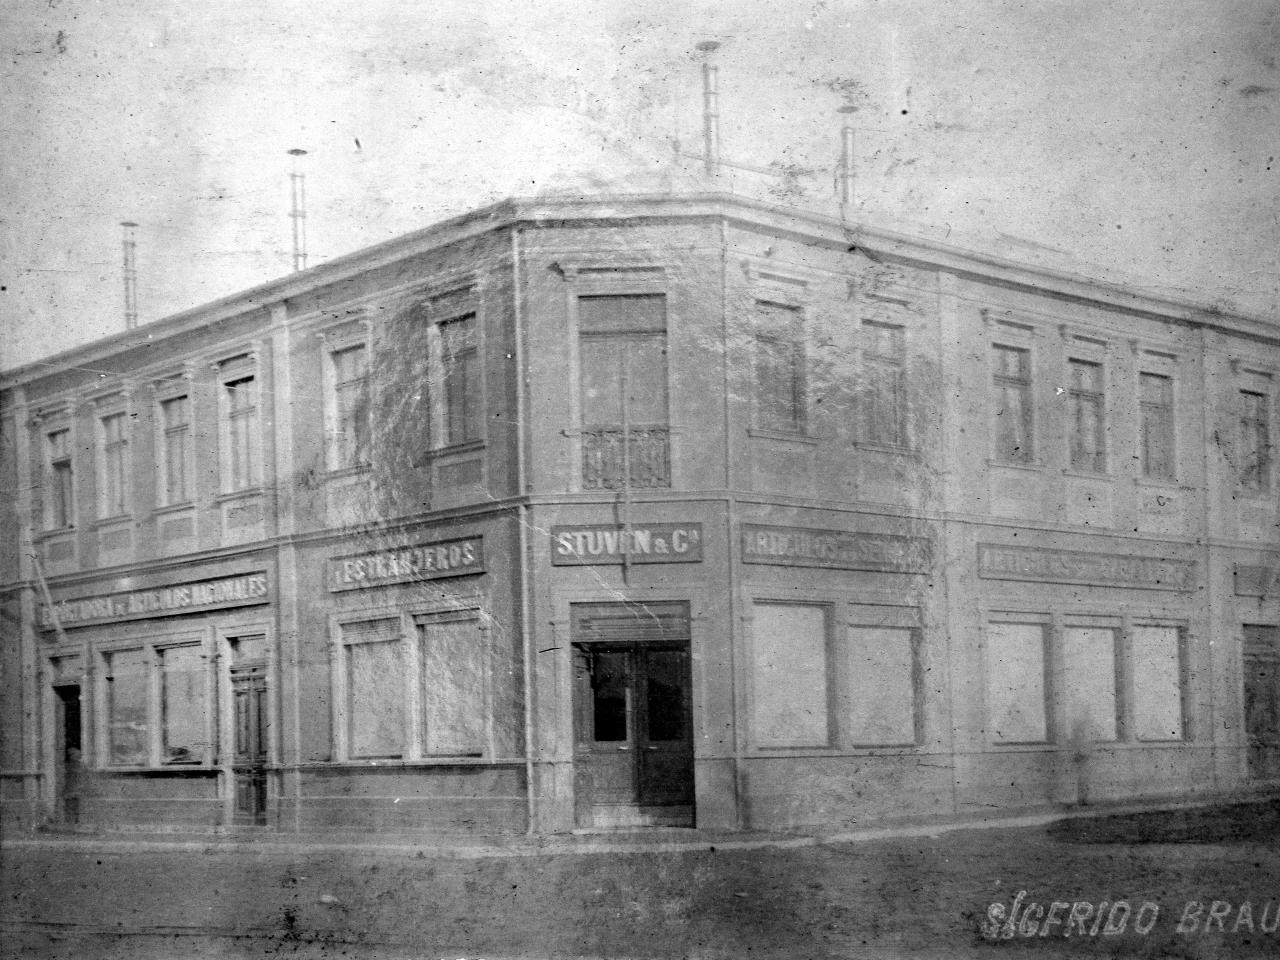 Tienda Stuven de Punta Arenas